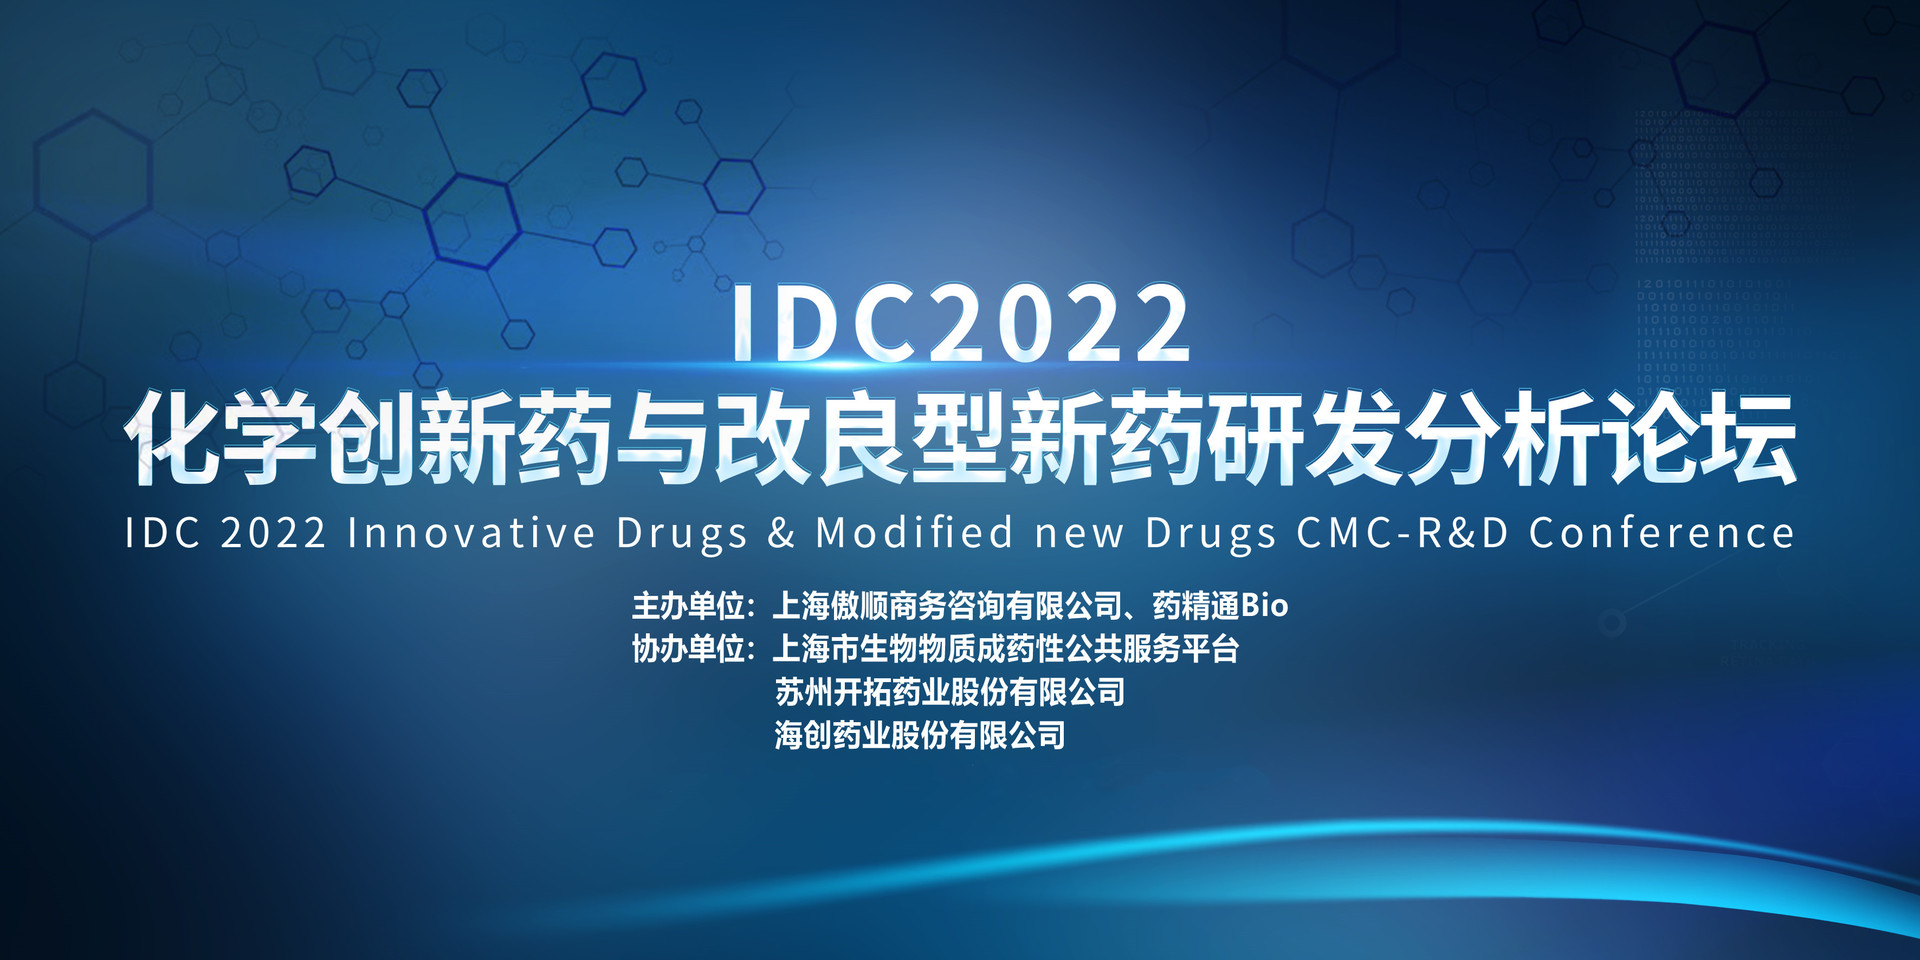 IDC 2022 化学创新药研发与改良型新药研发分析论坛